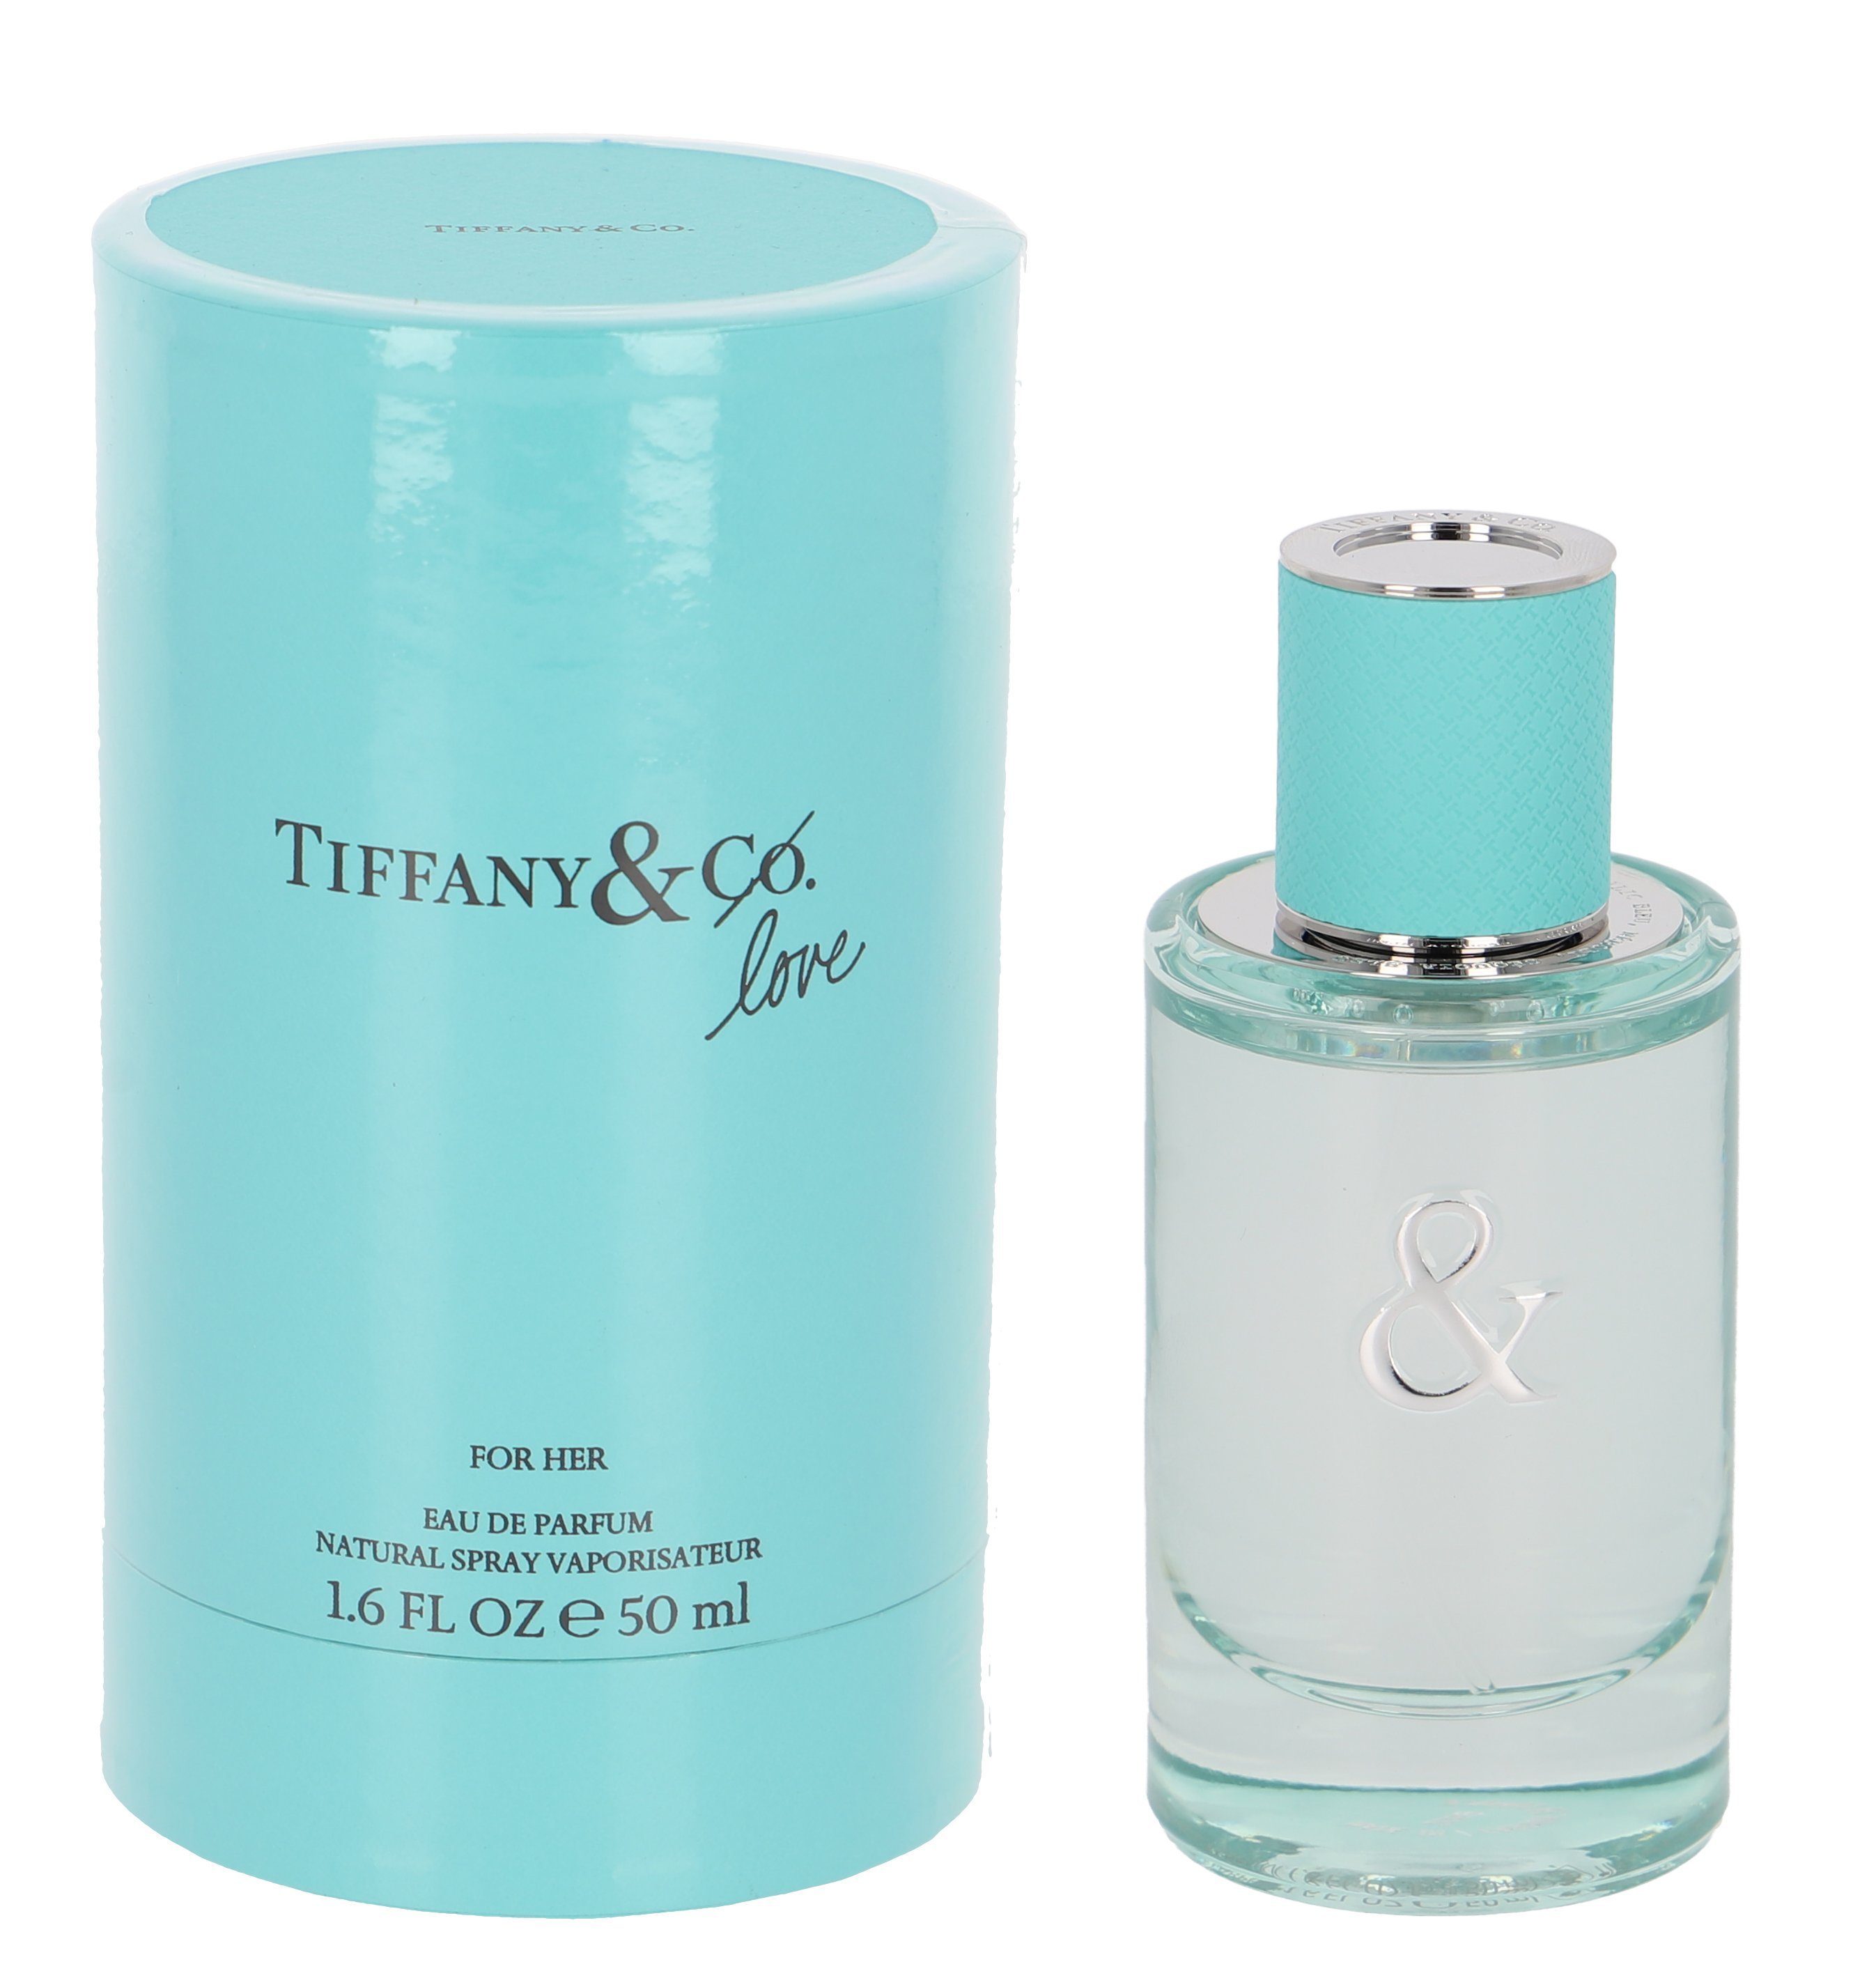 de Femme Love Eau Tiffany&Co & Co. Parfum Tiffany